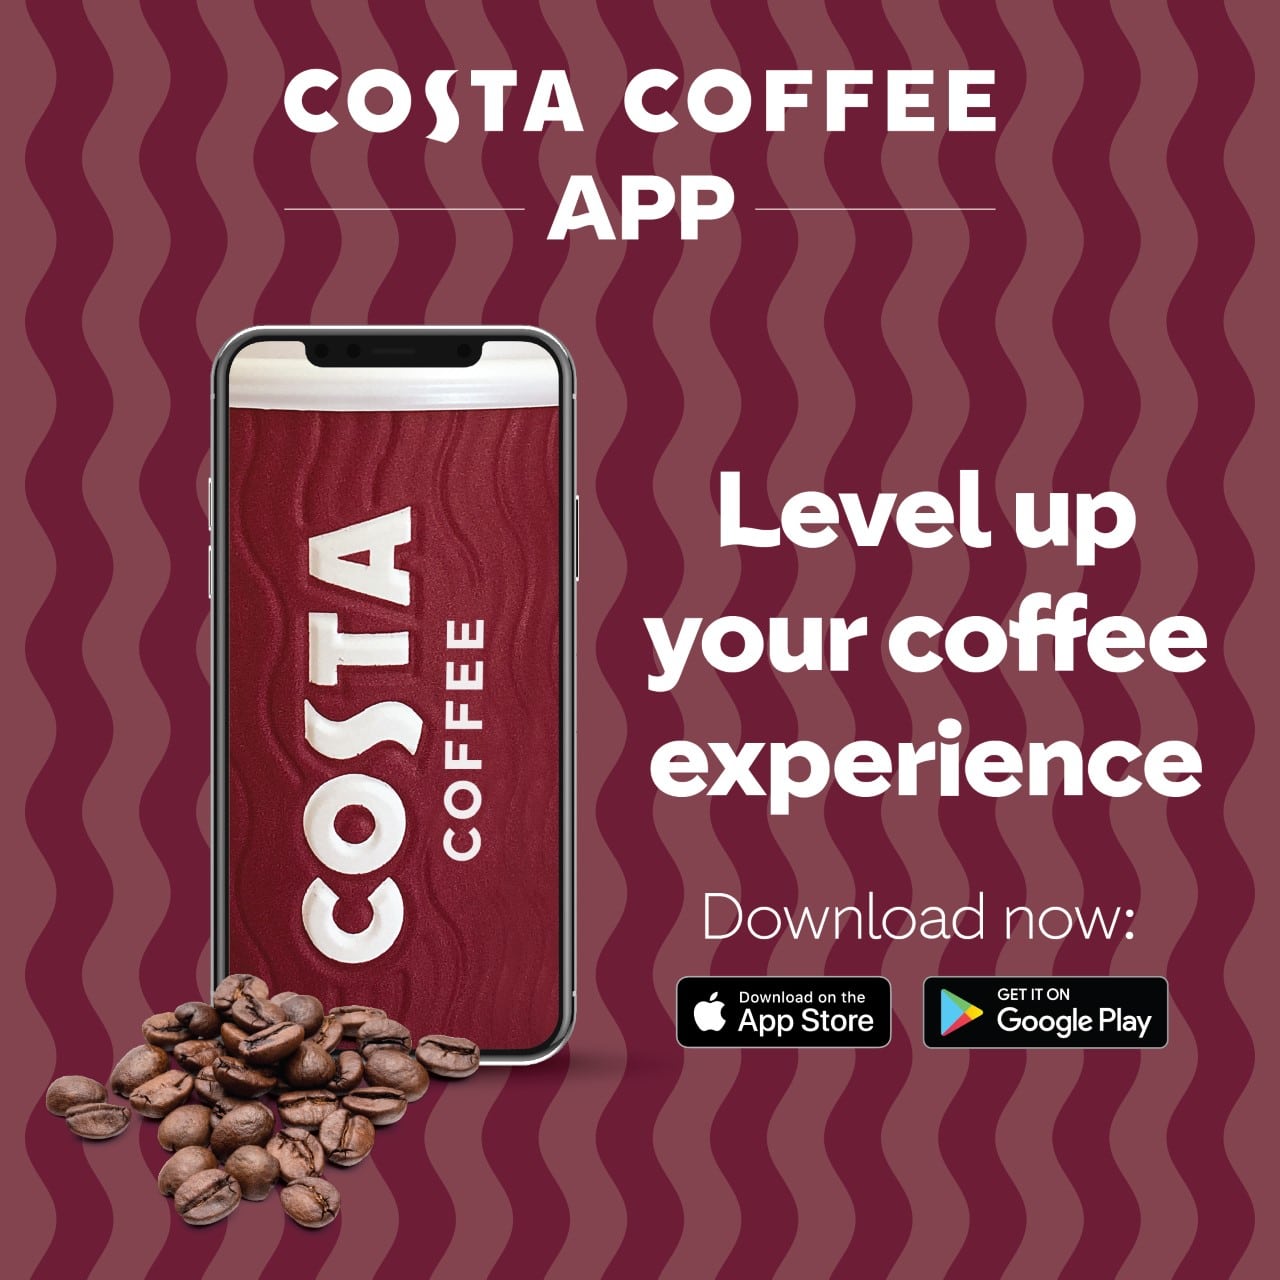 costa coffee1 Aγαπημένες καφετέριες, Costa Coffee